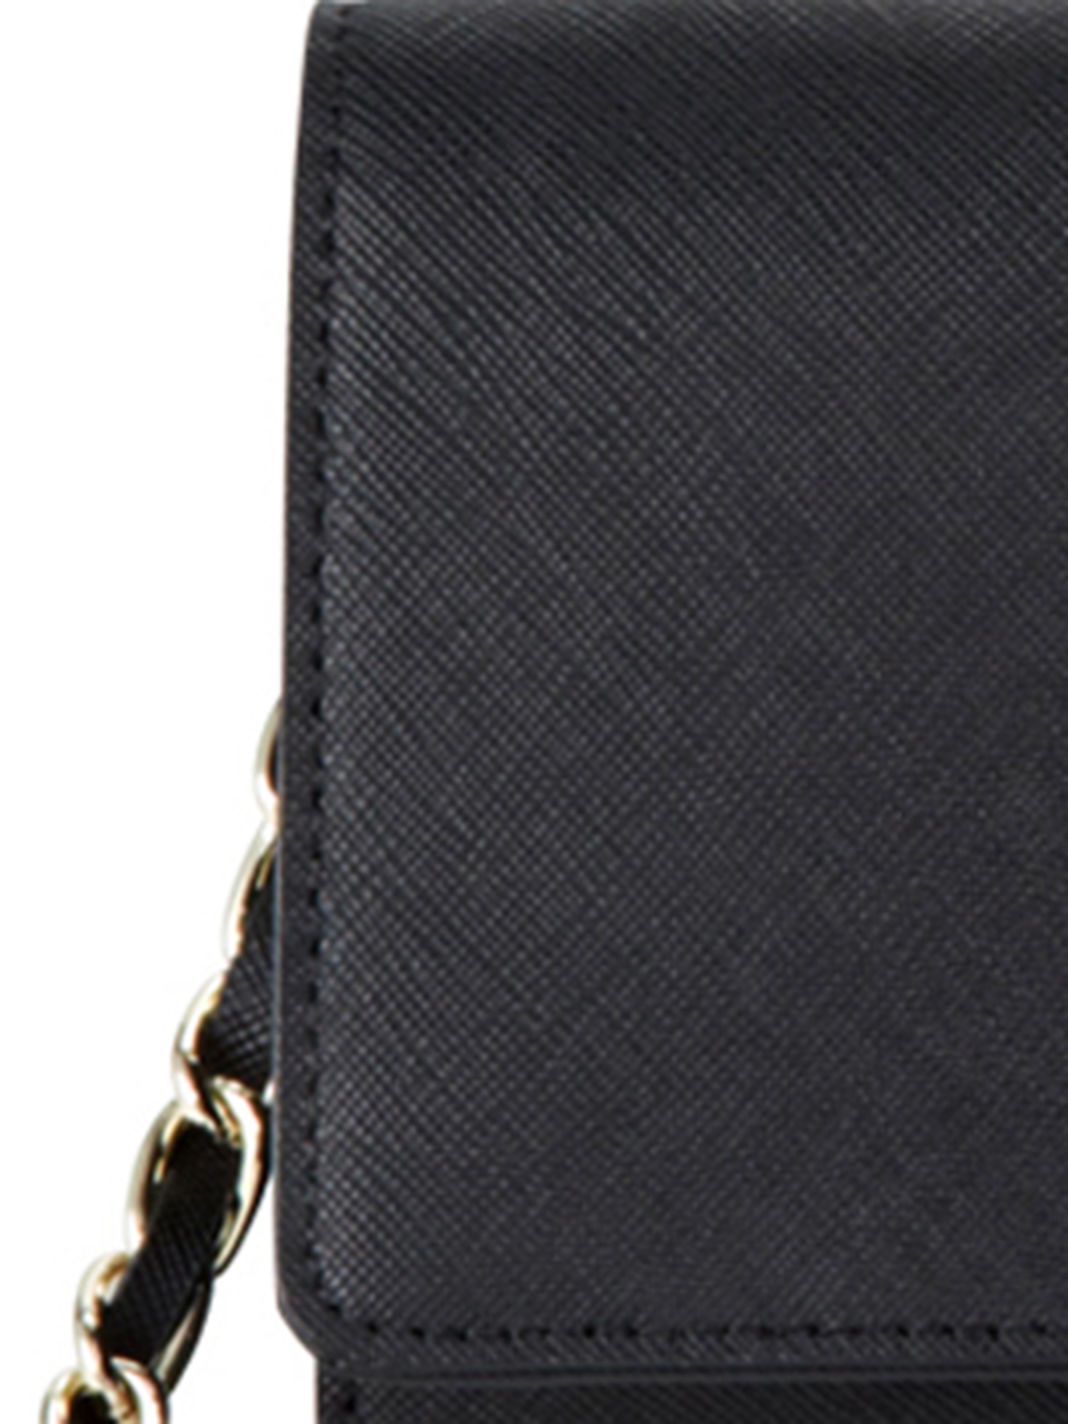 DKNY Saffiano Leather Wallet Clutch in Black - Lyst